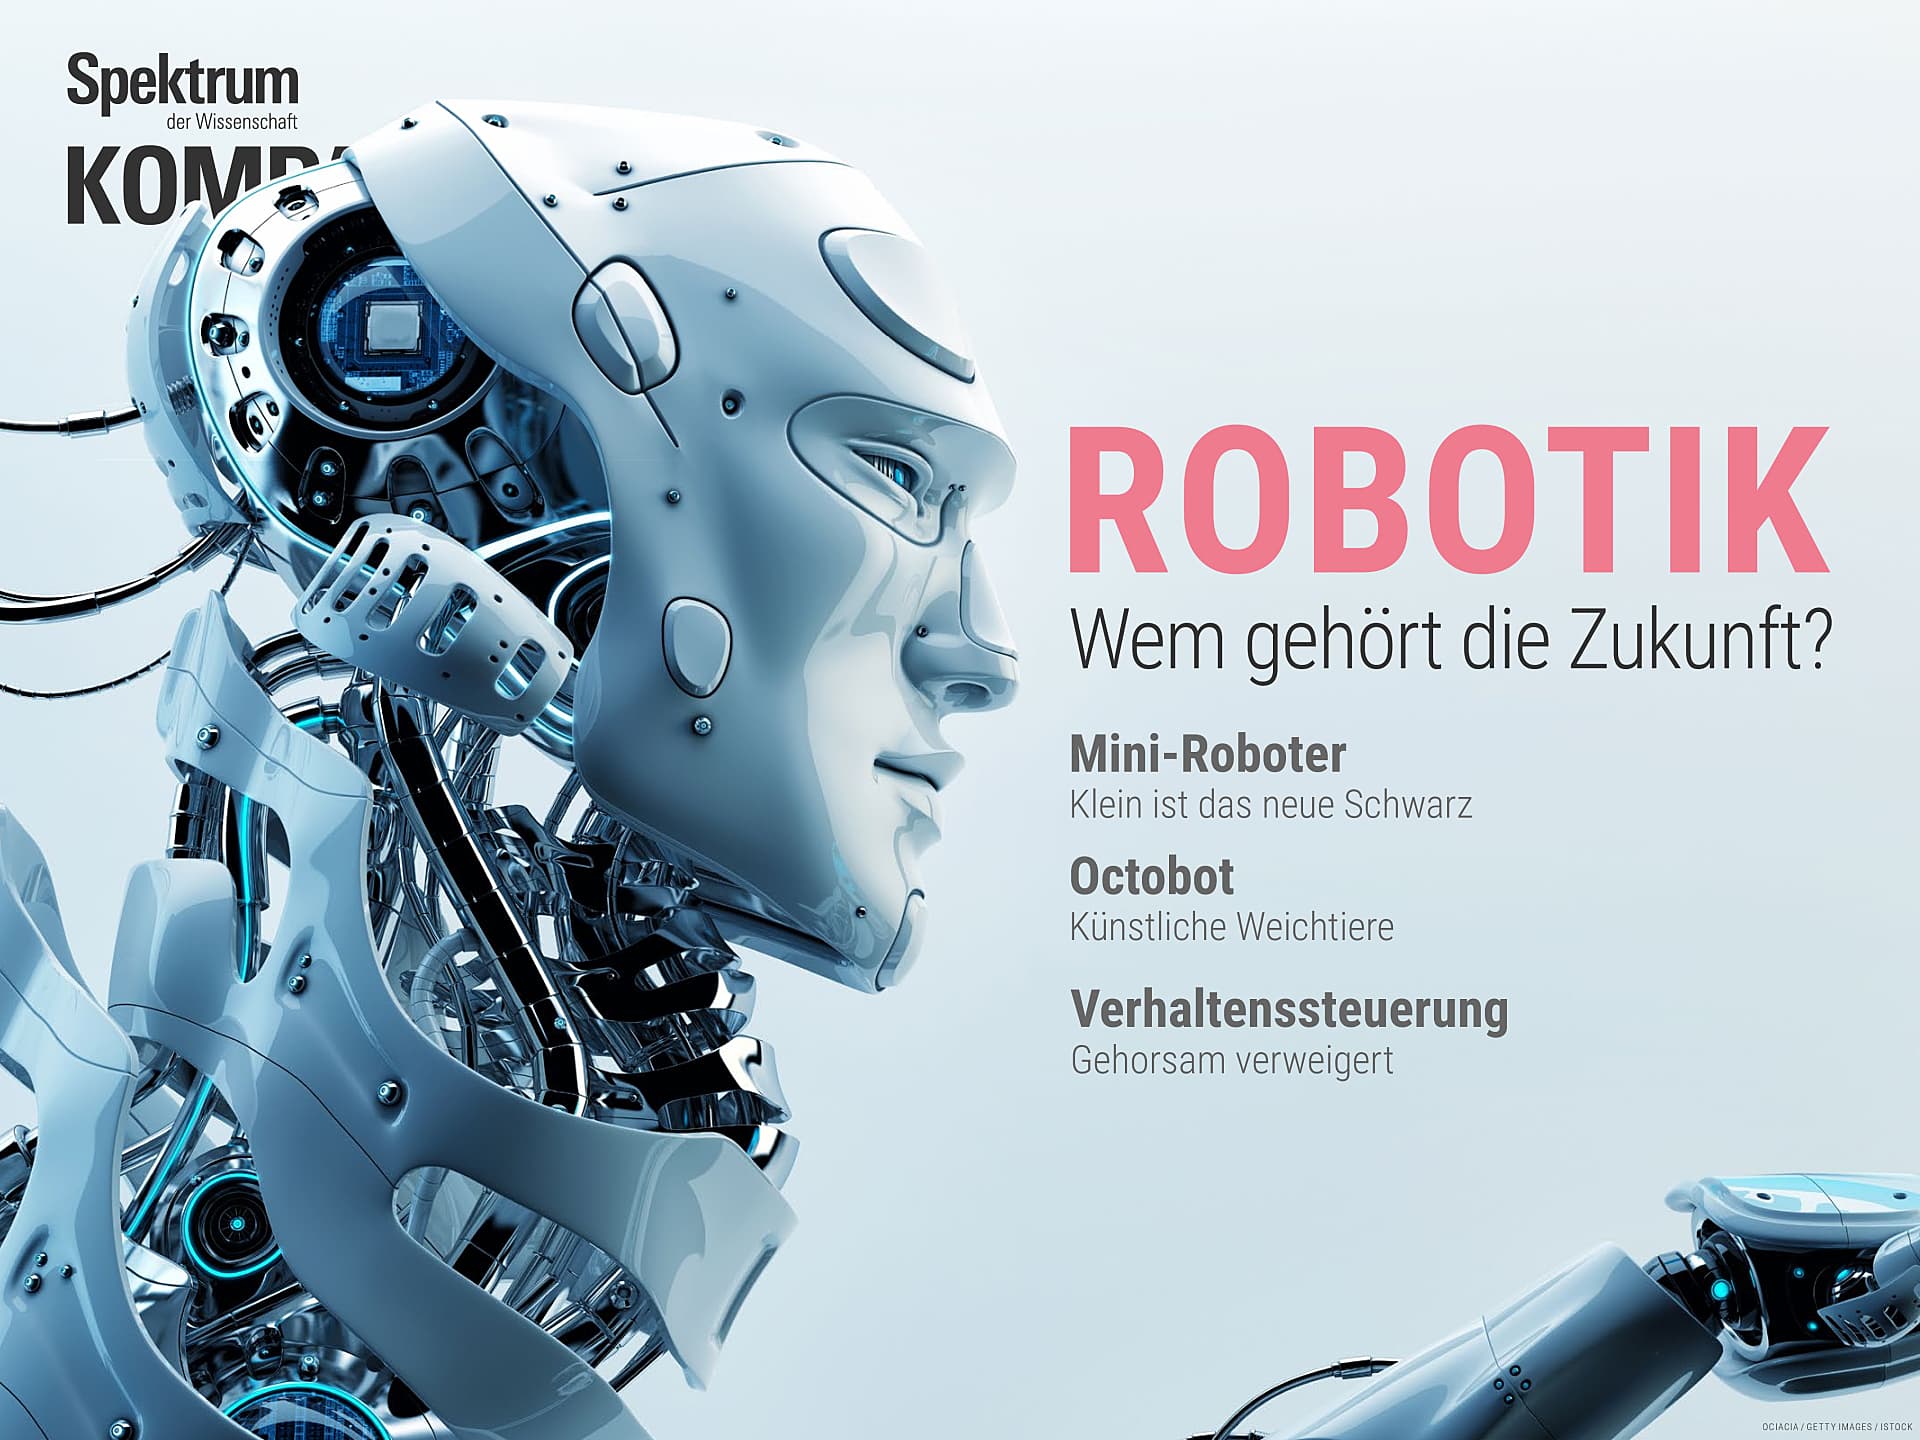 Robotik - Wem gehört die Zukunft?